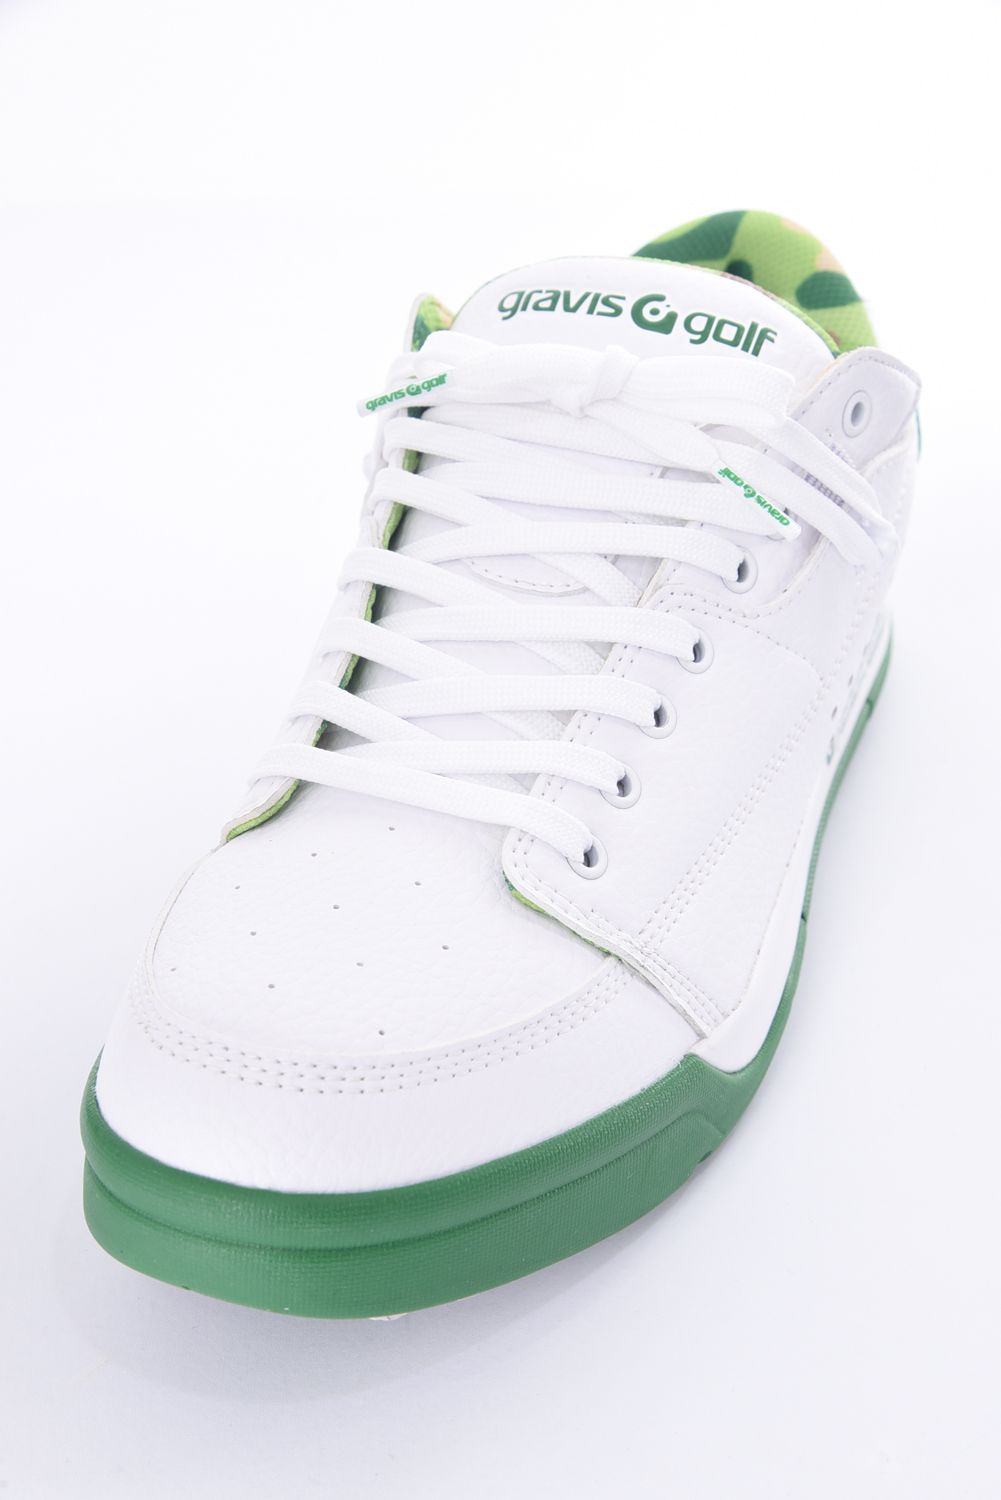 gravis golf - TARMAC-G LOW-CUT / GOLF COURSE CAMOパターン